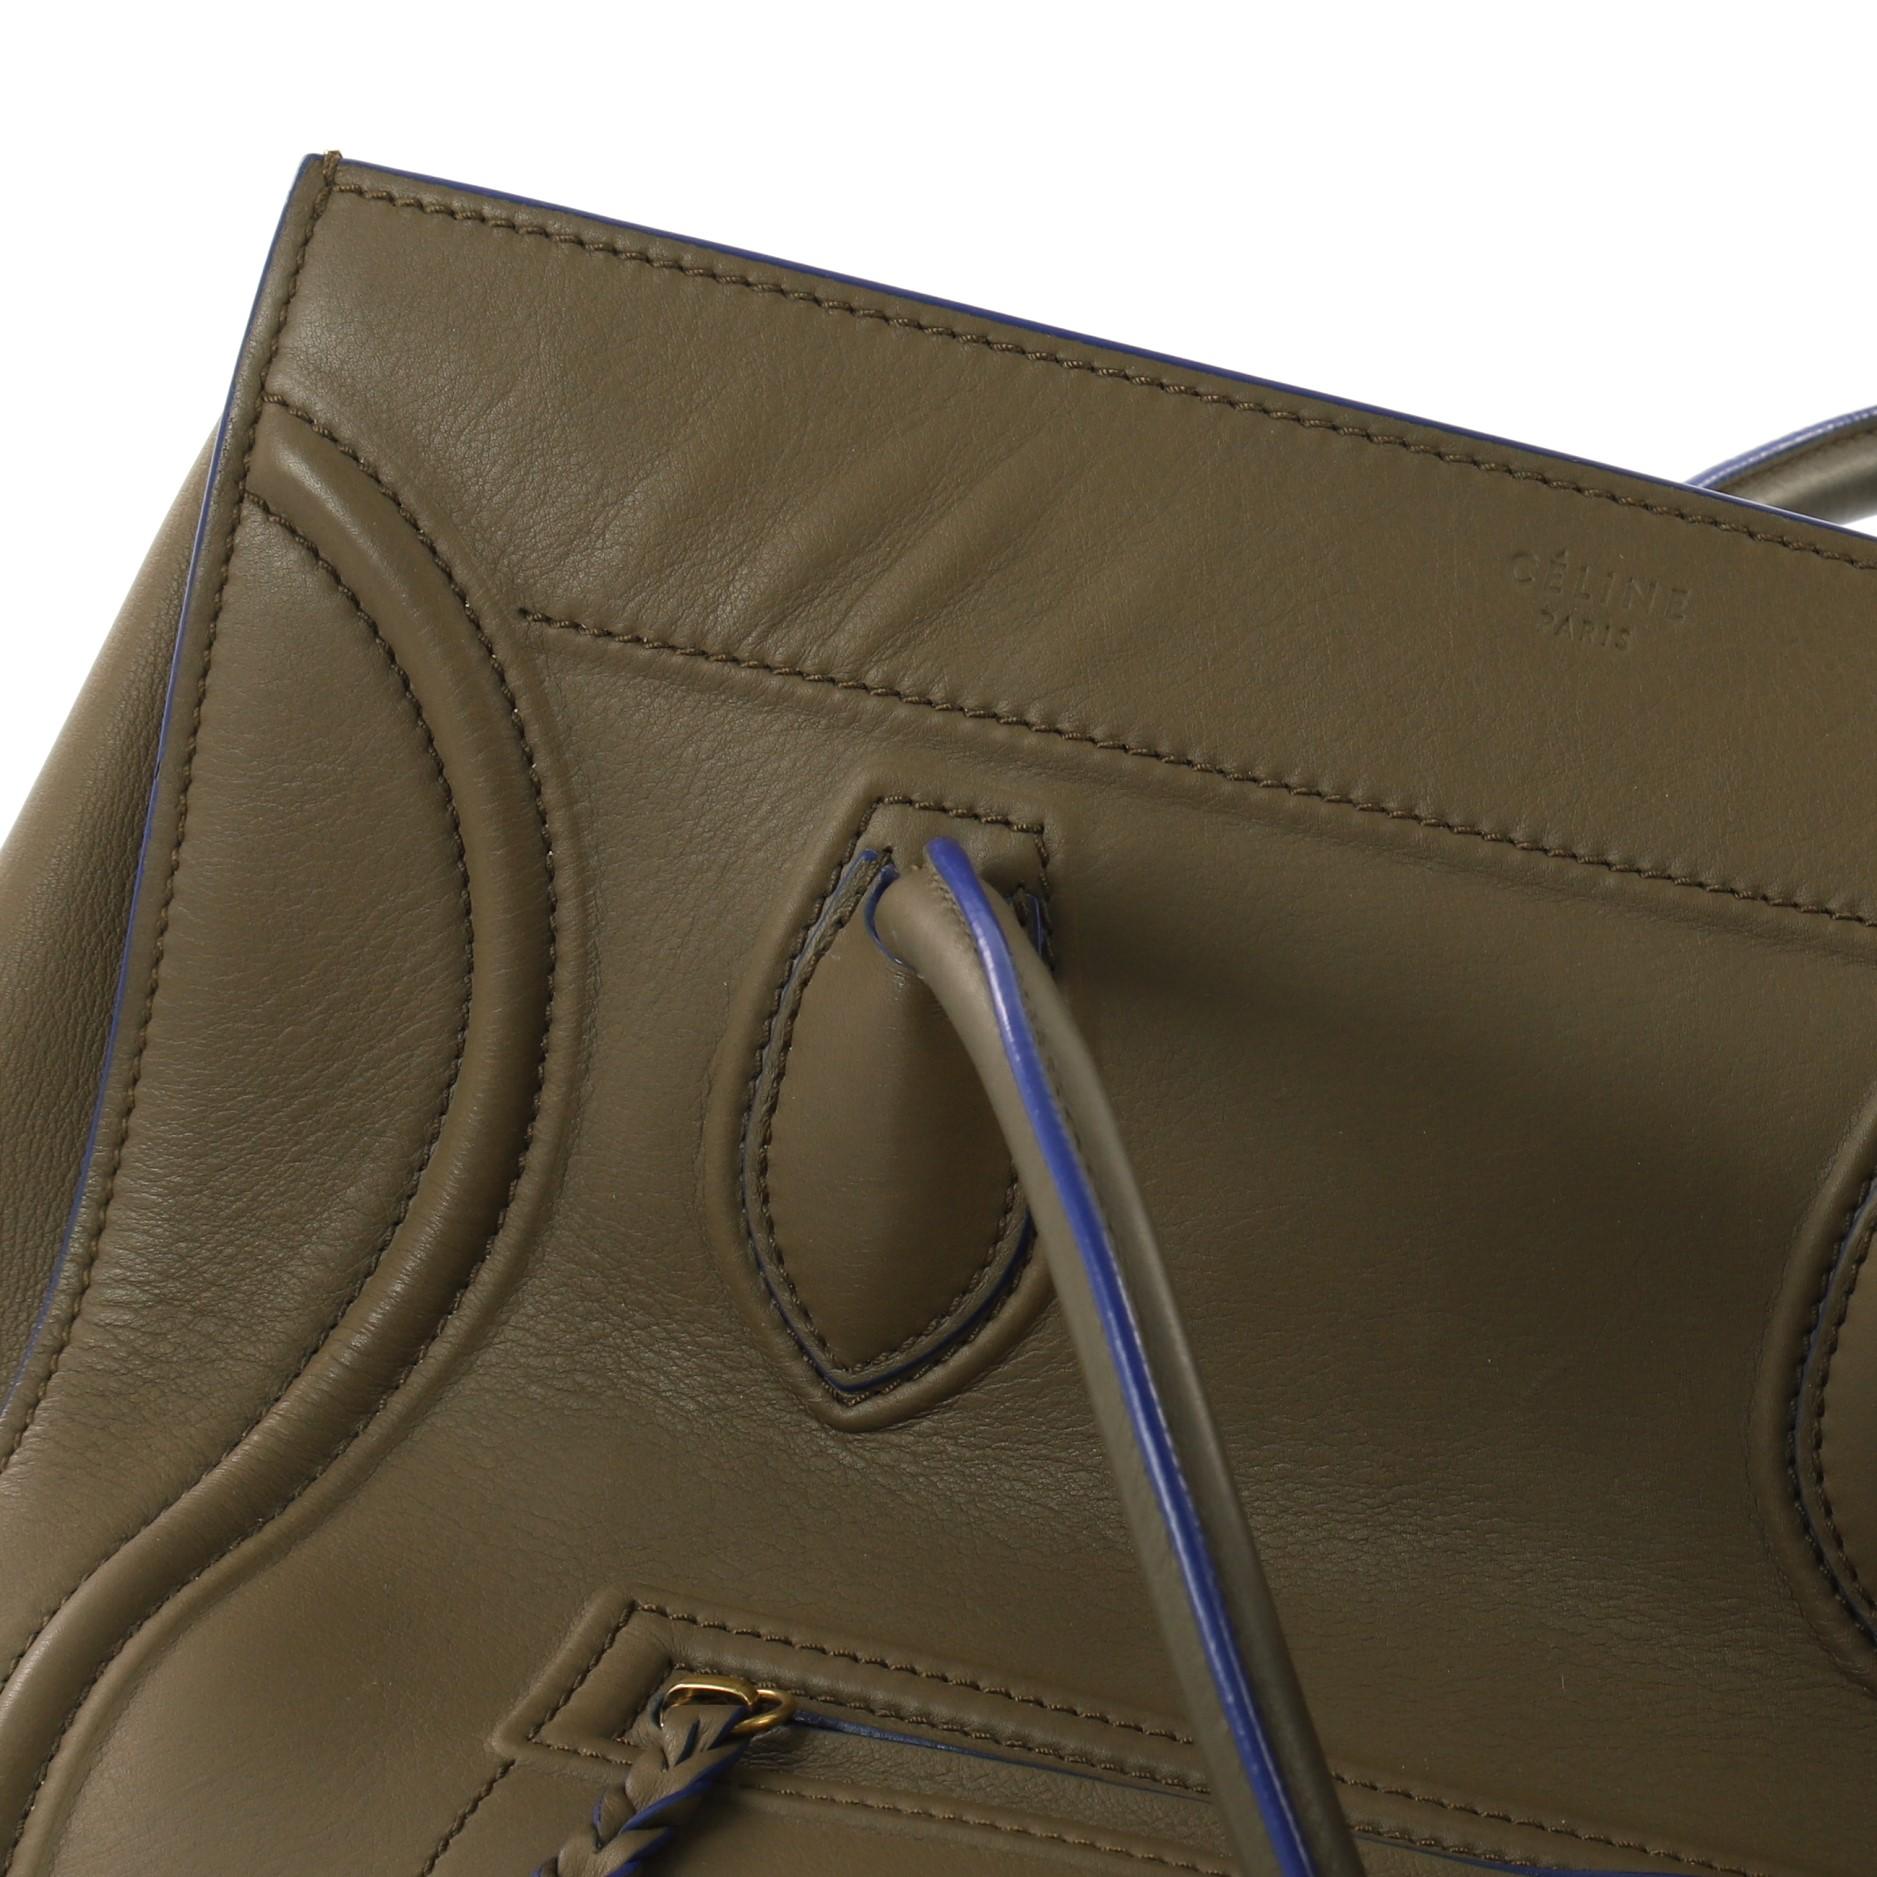  Celine Phantom Handbag Smooth Leather Large 2